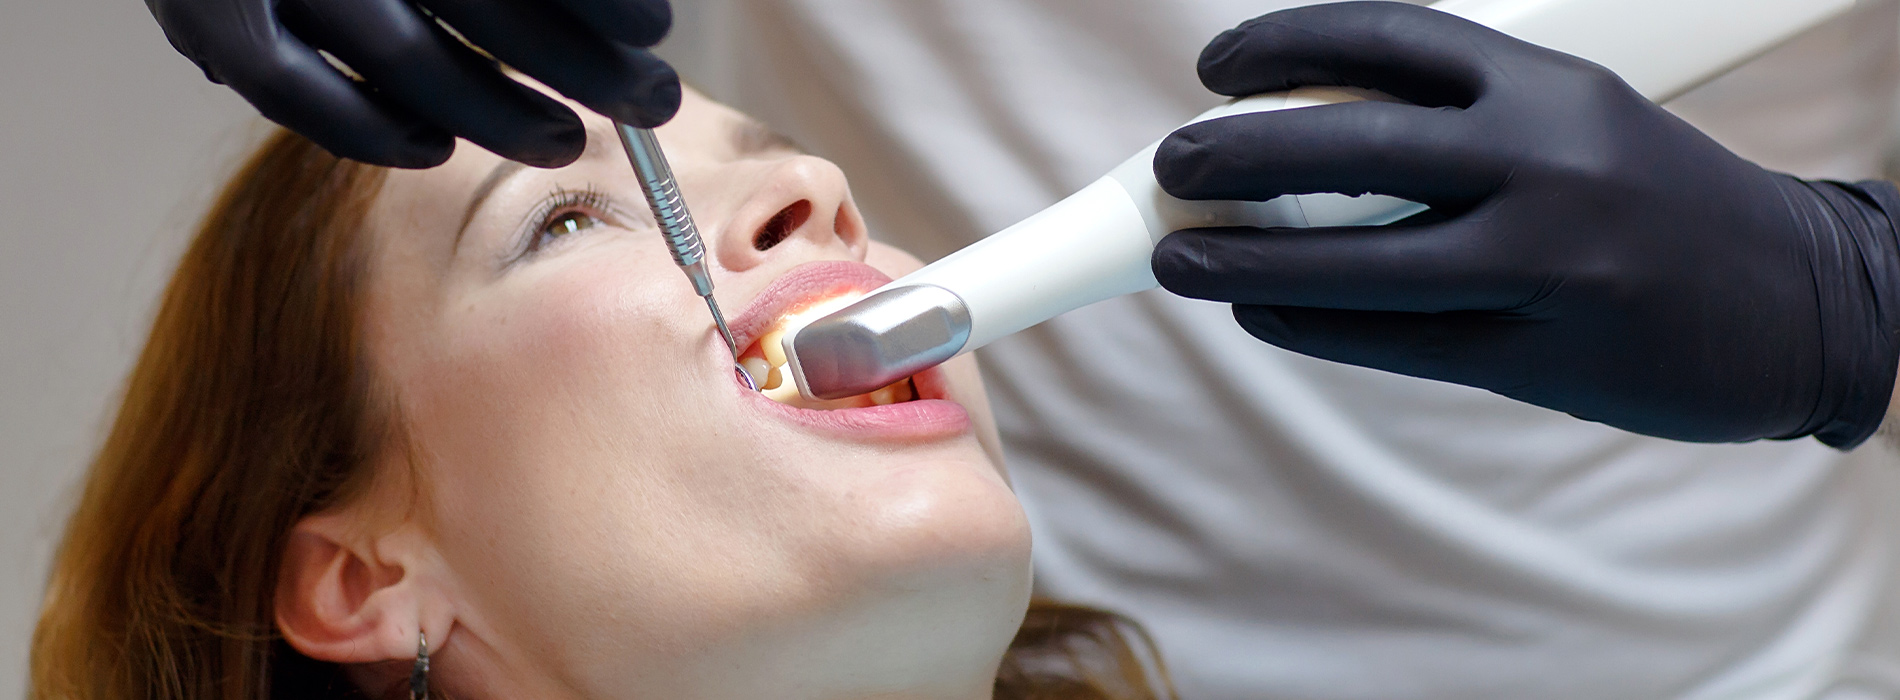 Bethesda Row Dental | Restorative Dentistry, Cosmetic Dentistry and Invisalign reg 